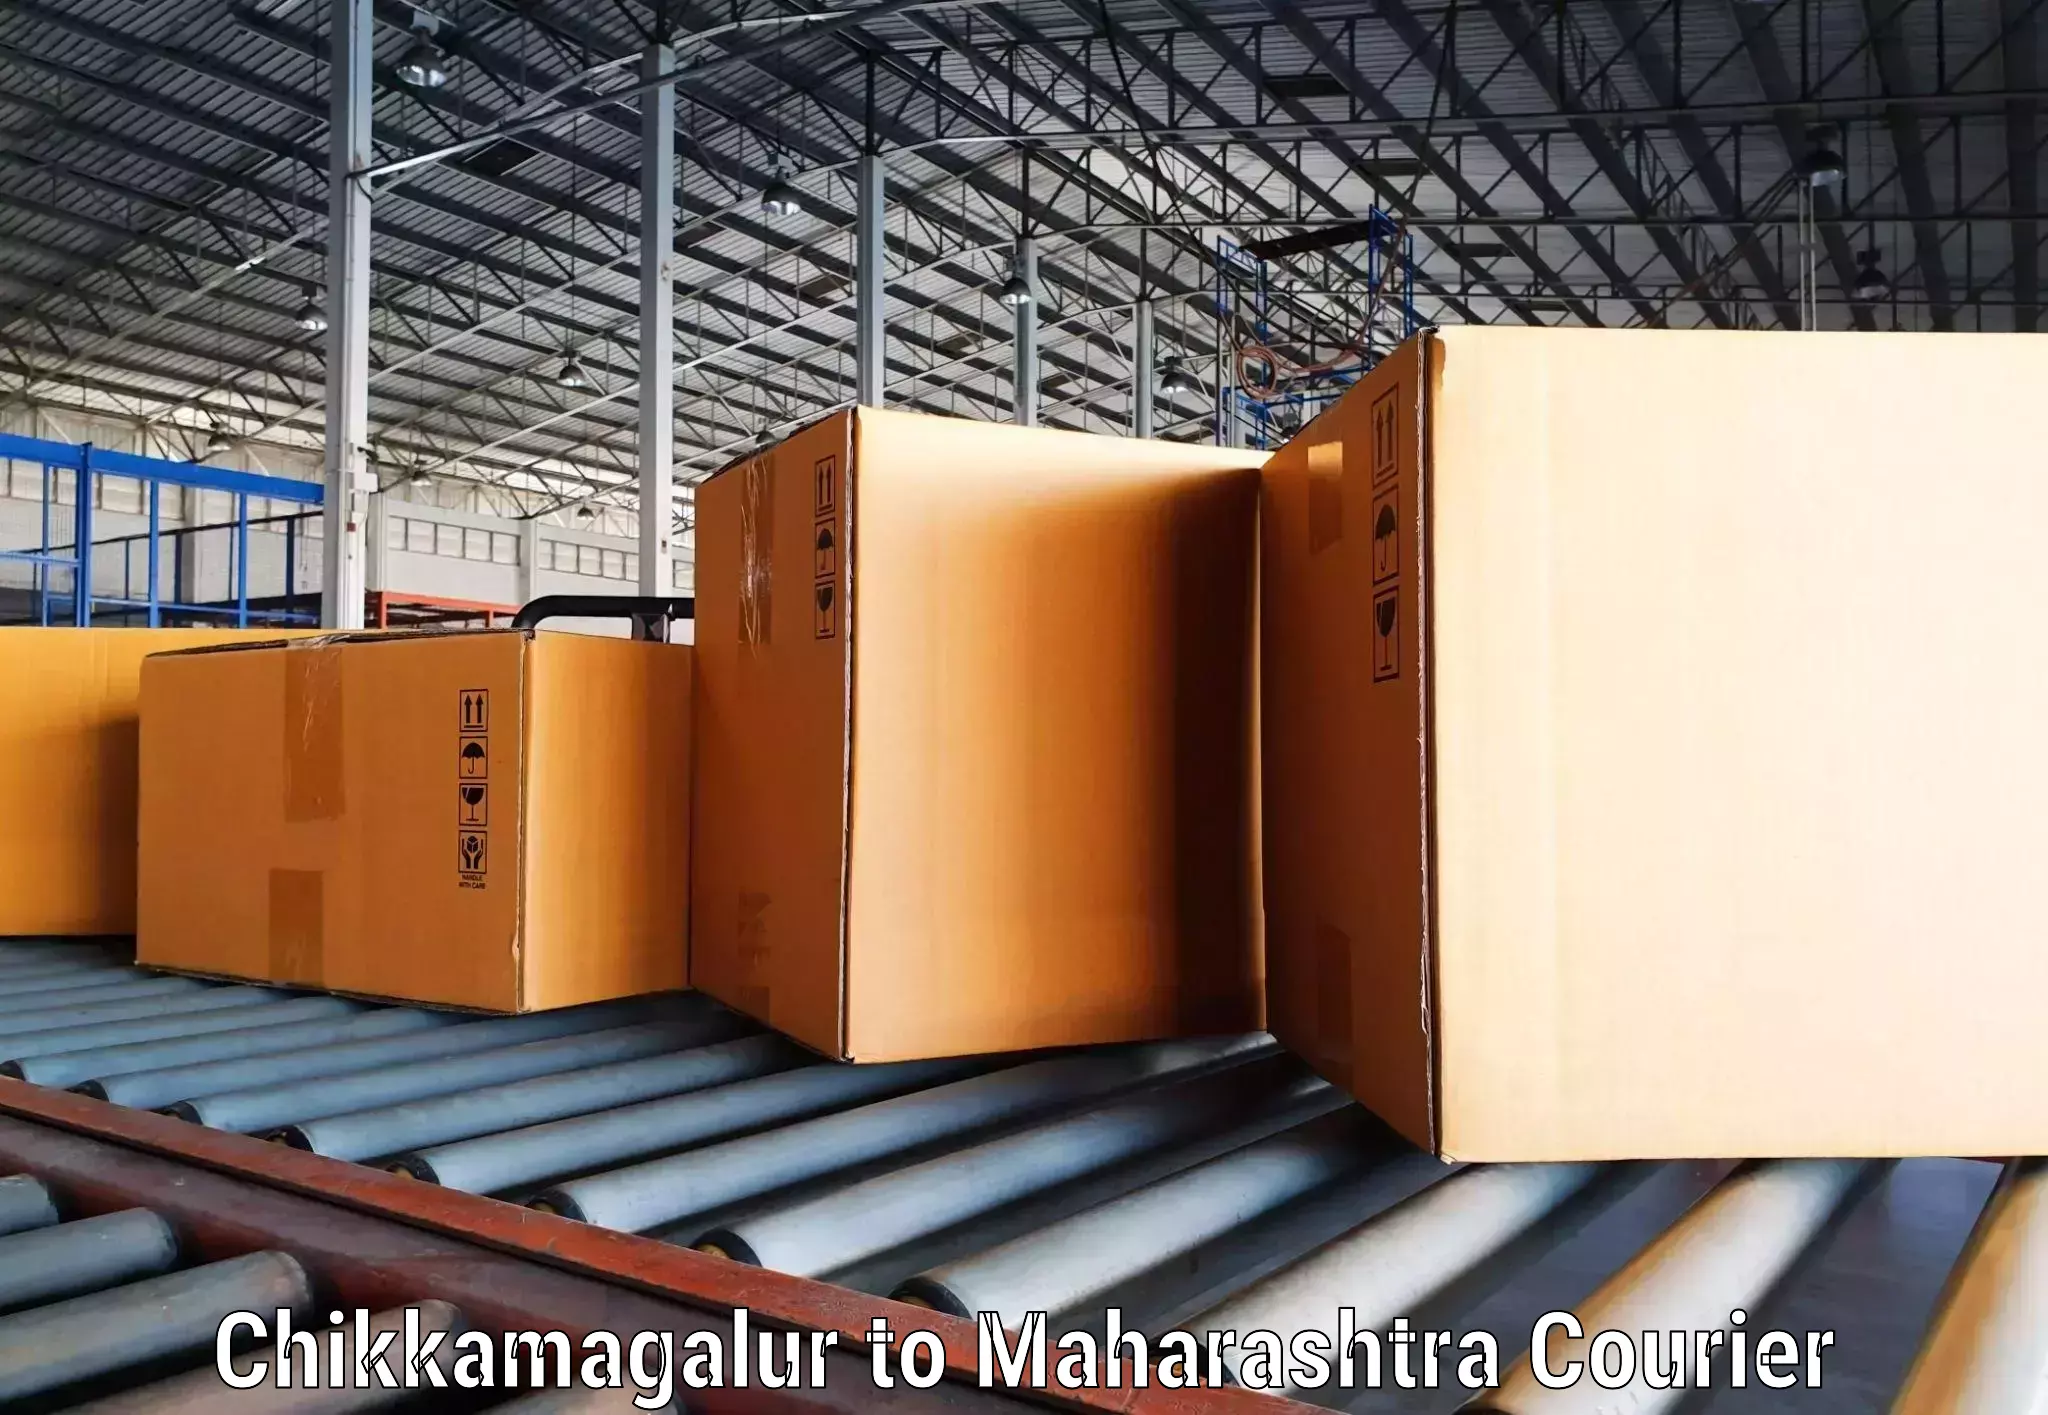 Logistics service provider Chikkamagalur to Buldhana